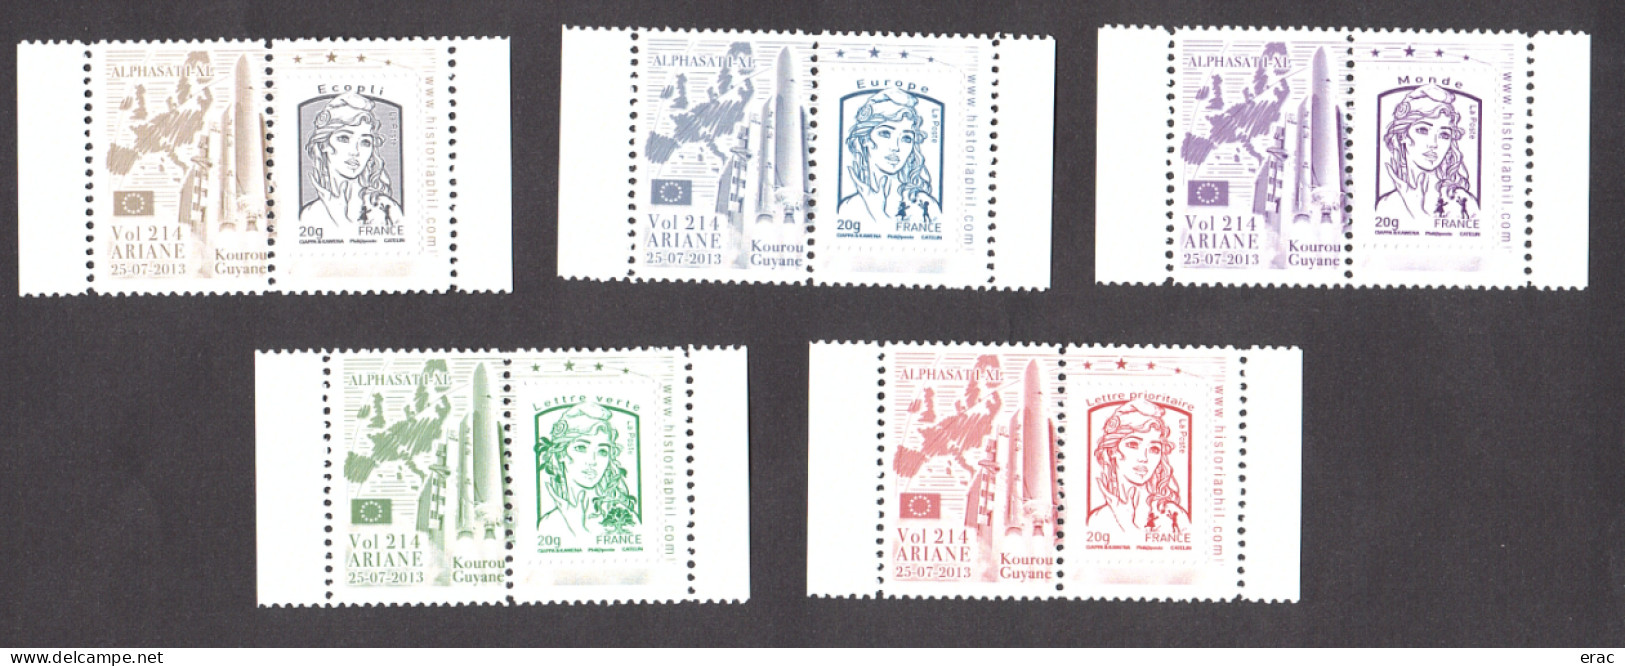 5 Porte-timbres Gommés - 2013 Ariane Vol 214 - Alphasati-XL - Avec TVP Marianne De Ciappa & Kawena Neufs - 2013-2018 Marianne Of Ciappa-Kawena